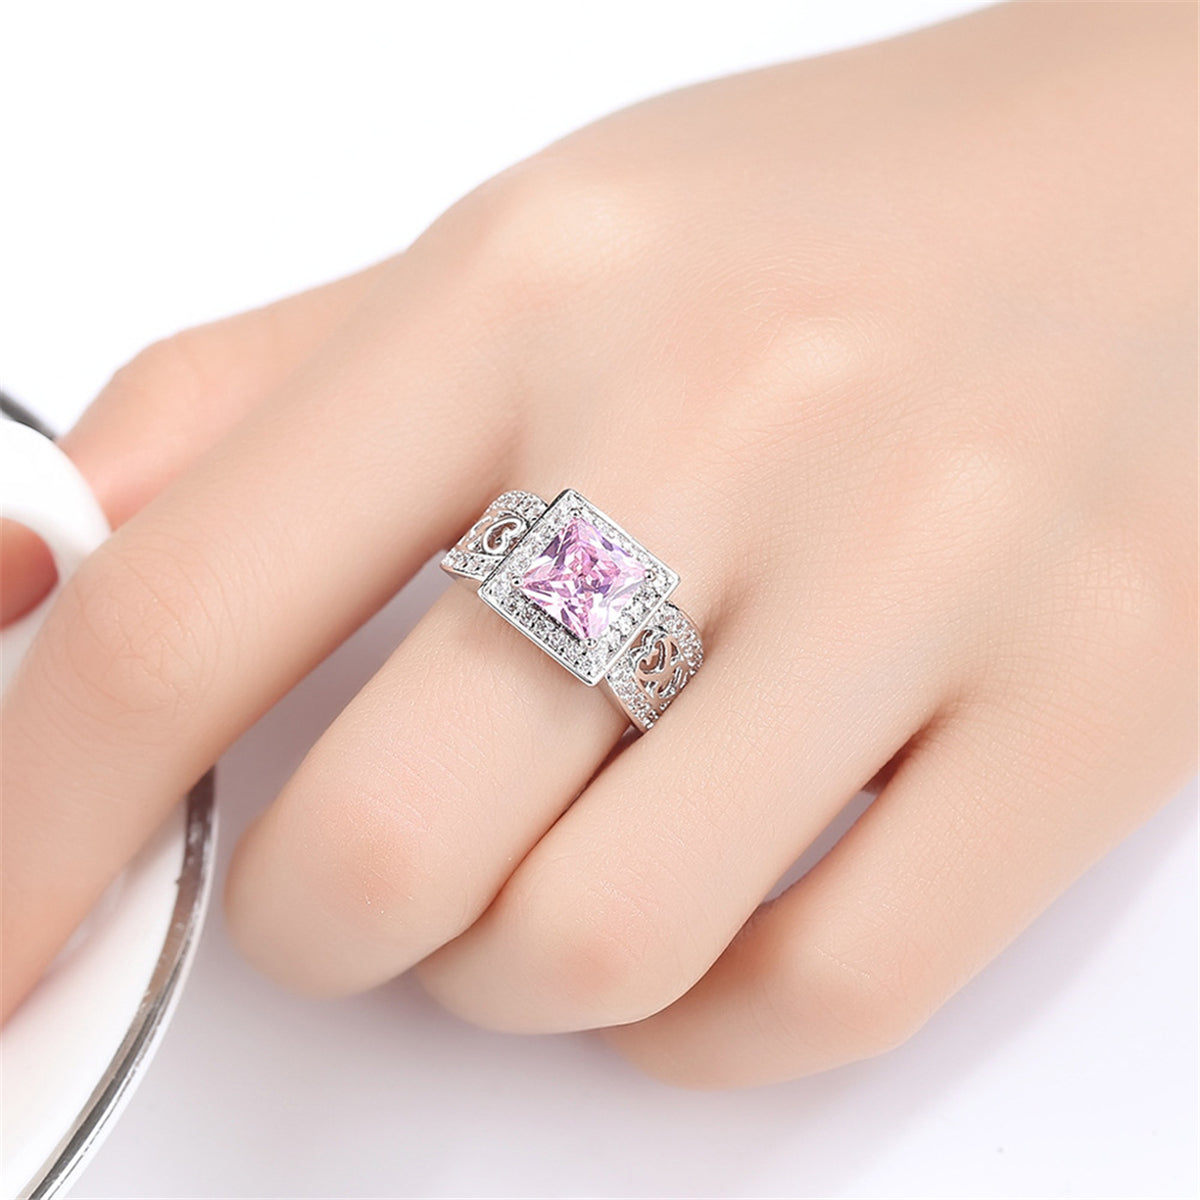 Pink Crystal & Cubic Zirconia Princess-Cut Openwork Heart Halo Ring